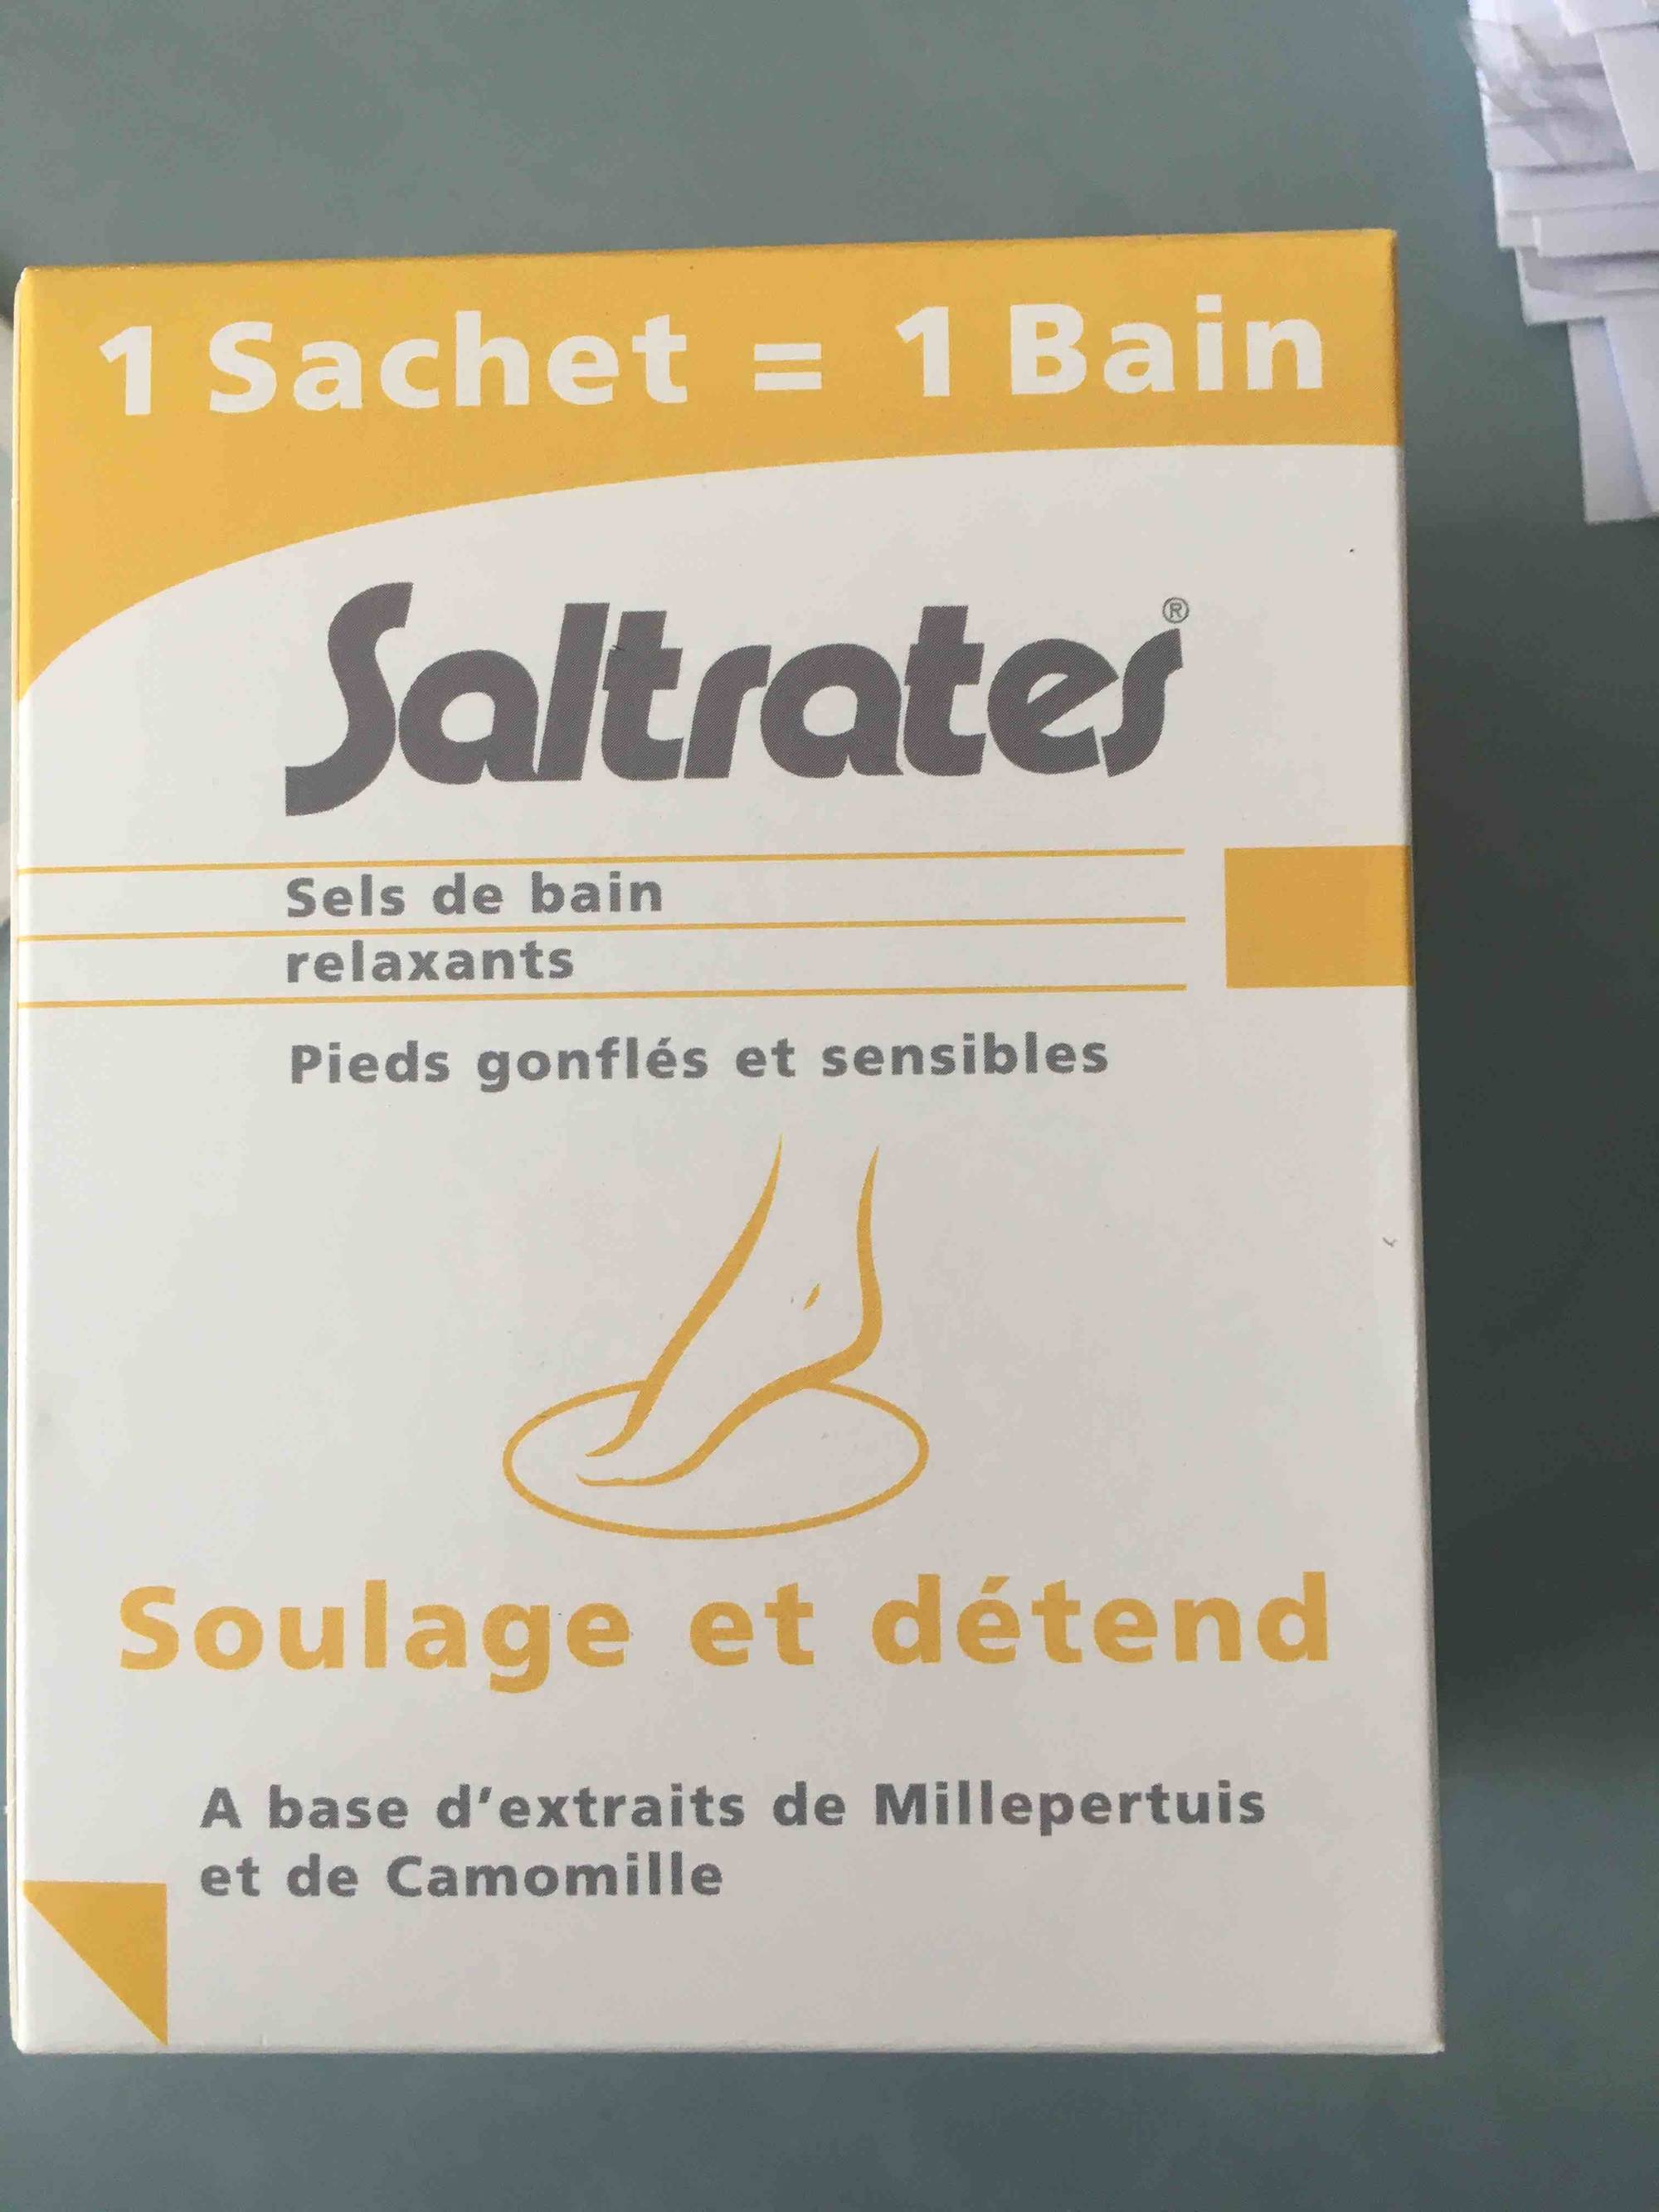 SALTRATES - Sels de bain relaxants pieds gonflés et sensibles